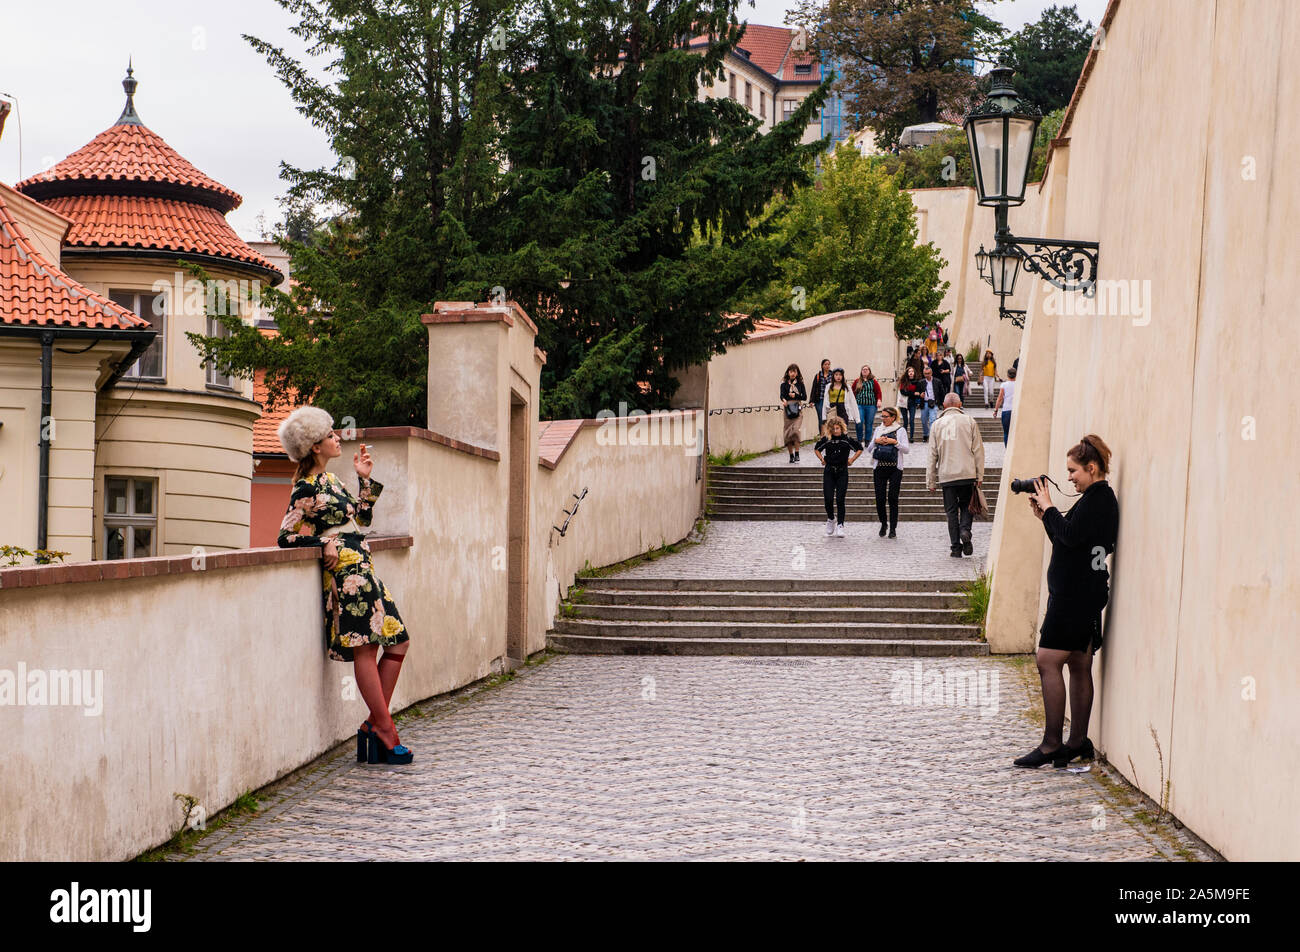 Woman taking photograph of fashionably dressed friend smoking on walkway, Prague, Czech Republic Stock Photo